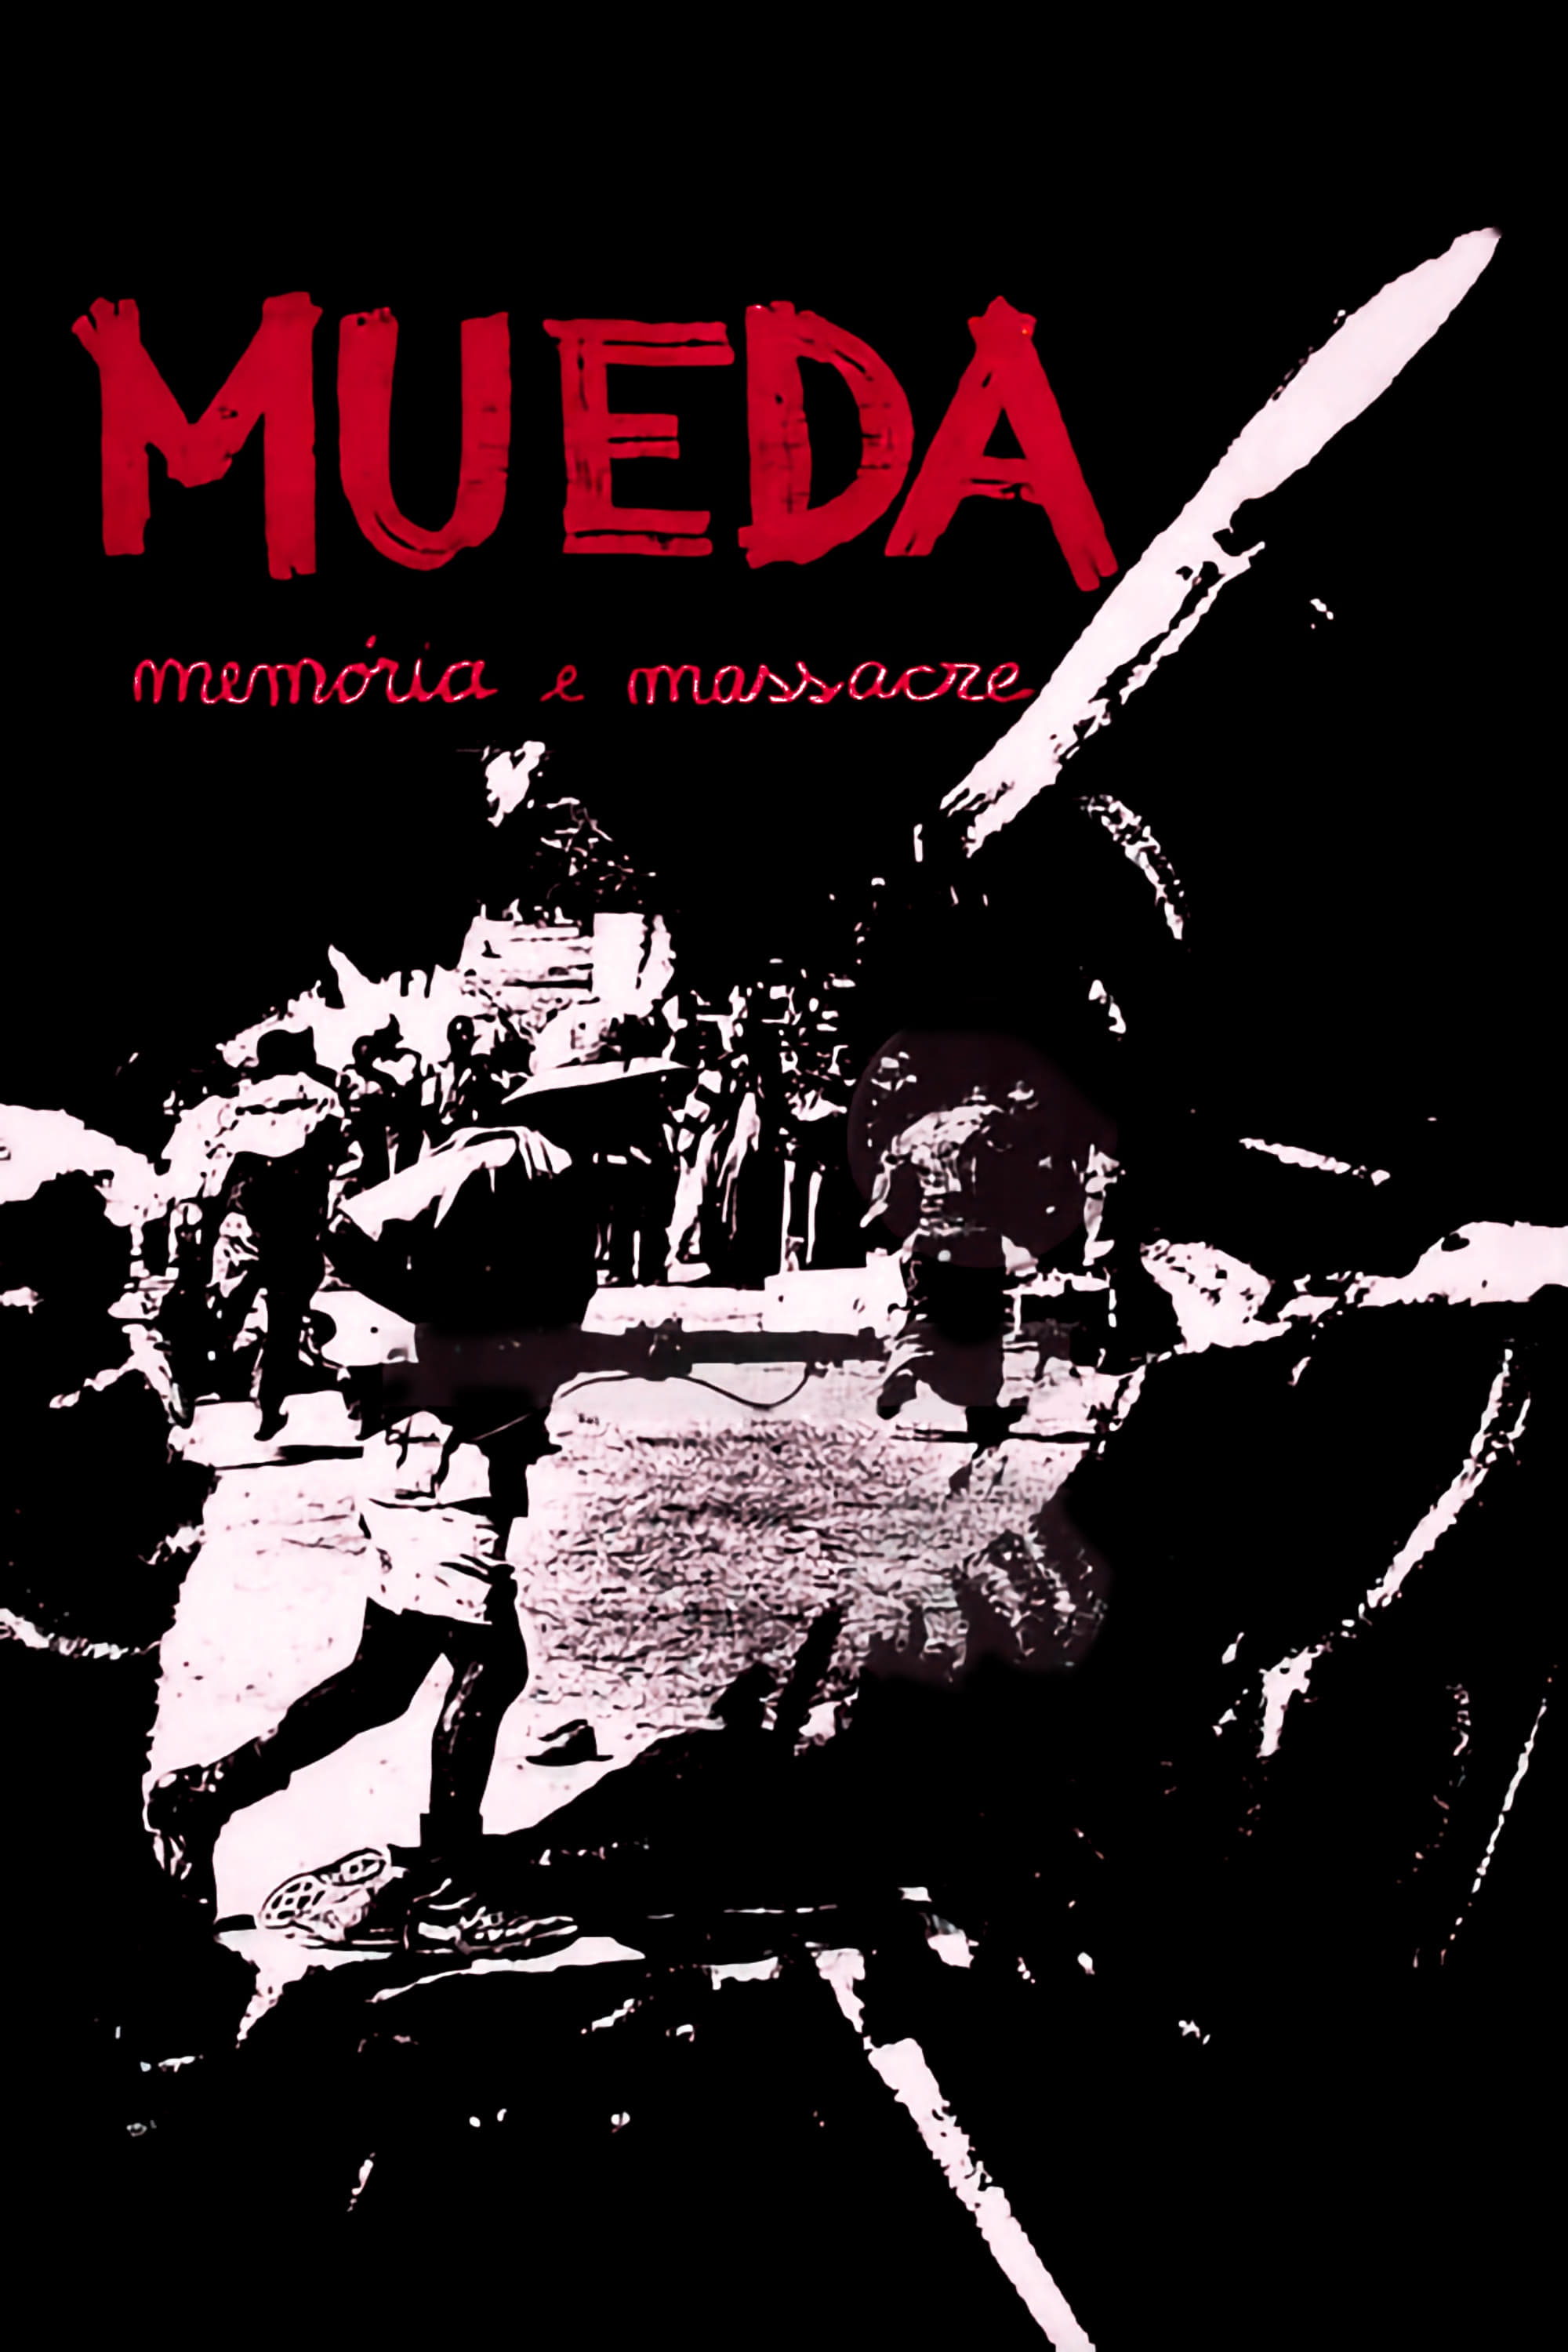 Mueda, Memory and Massacre